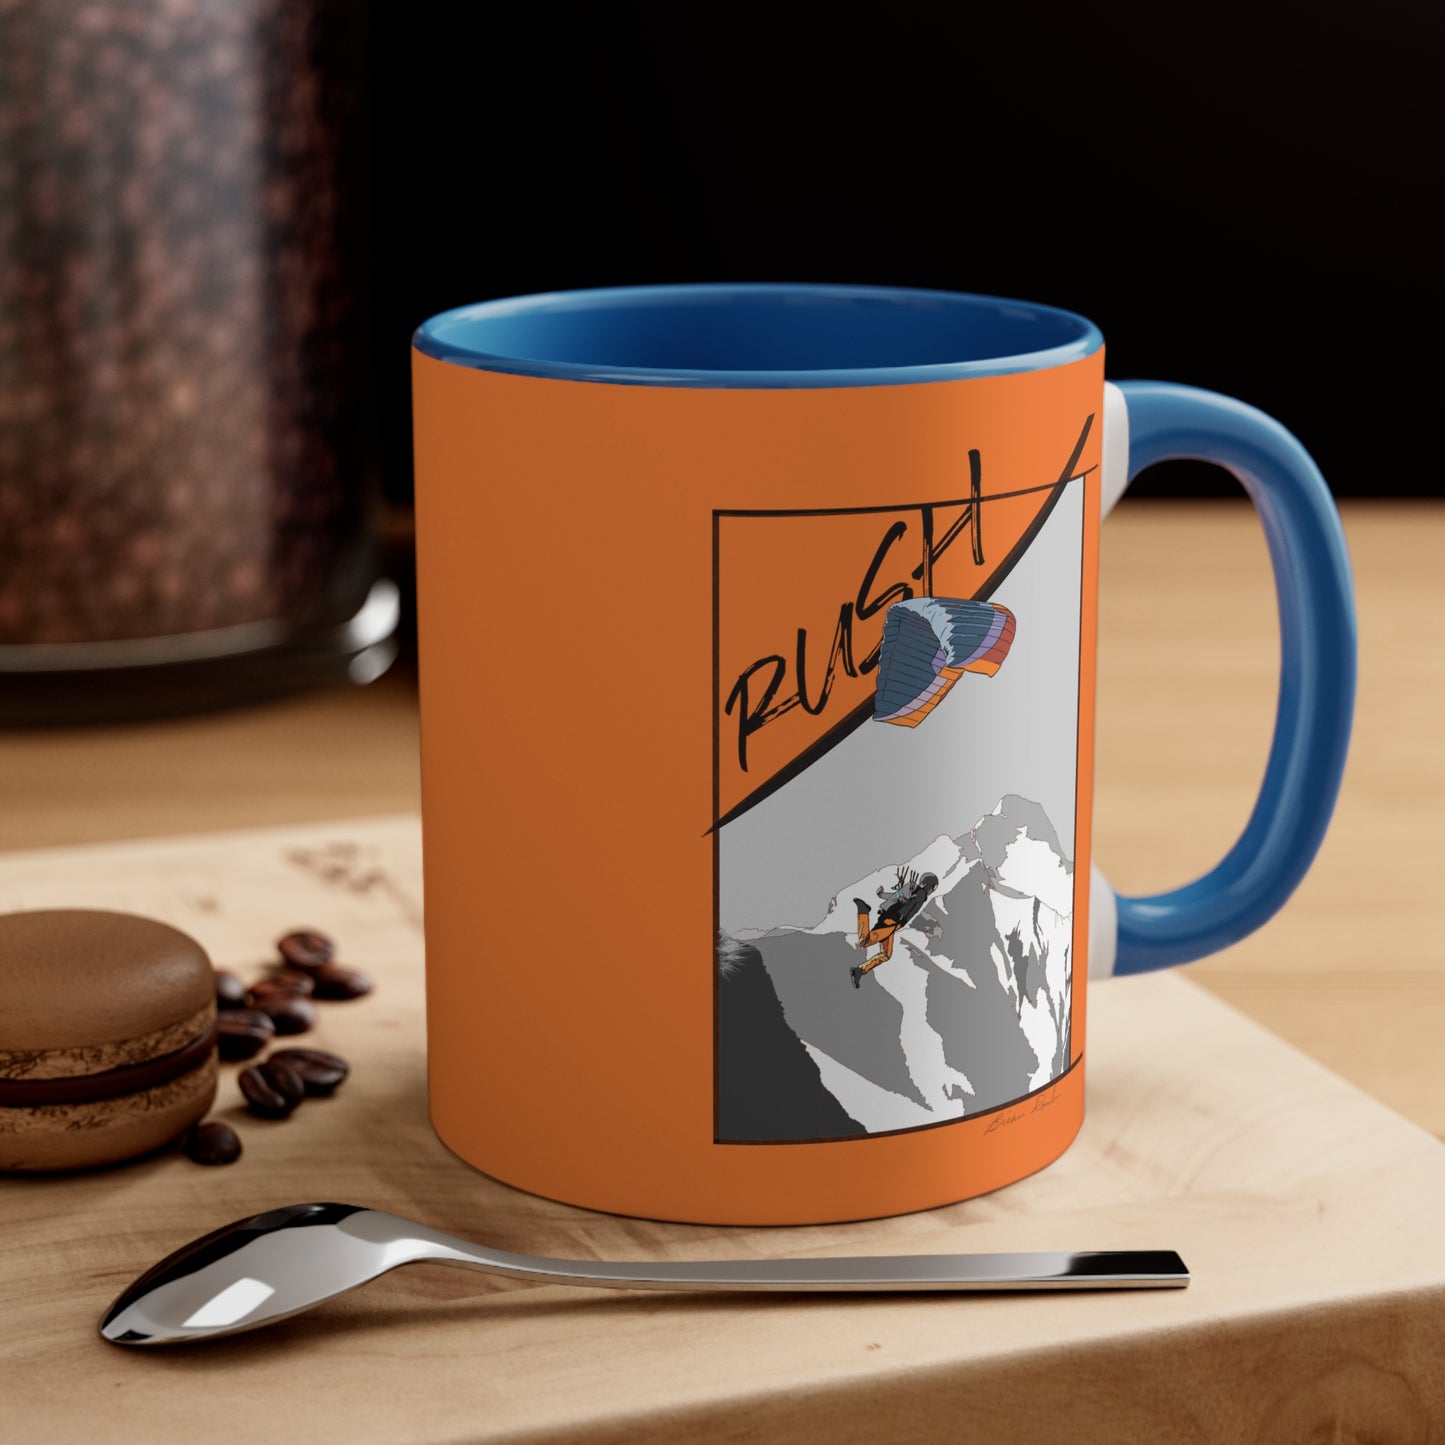 Orange "Rush" Speed Flying - Accent Coffee Mug, 11oz